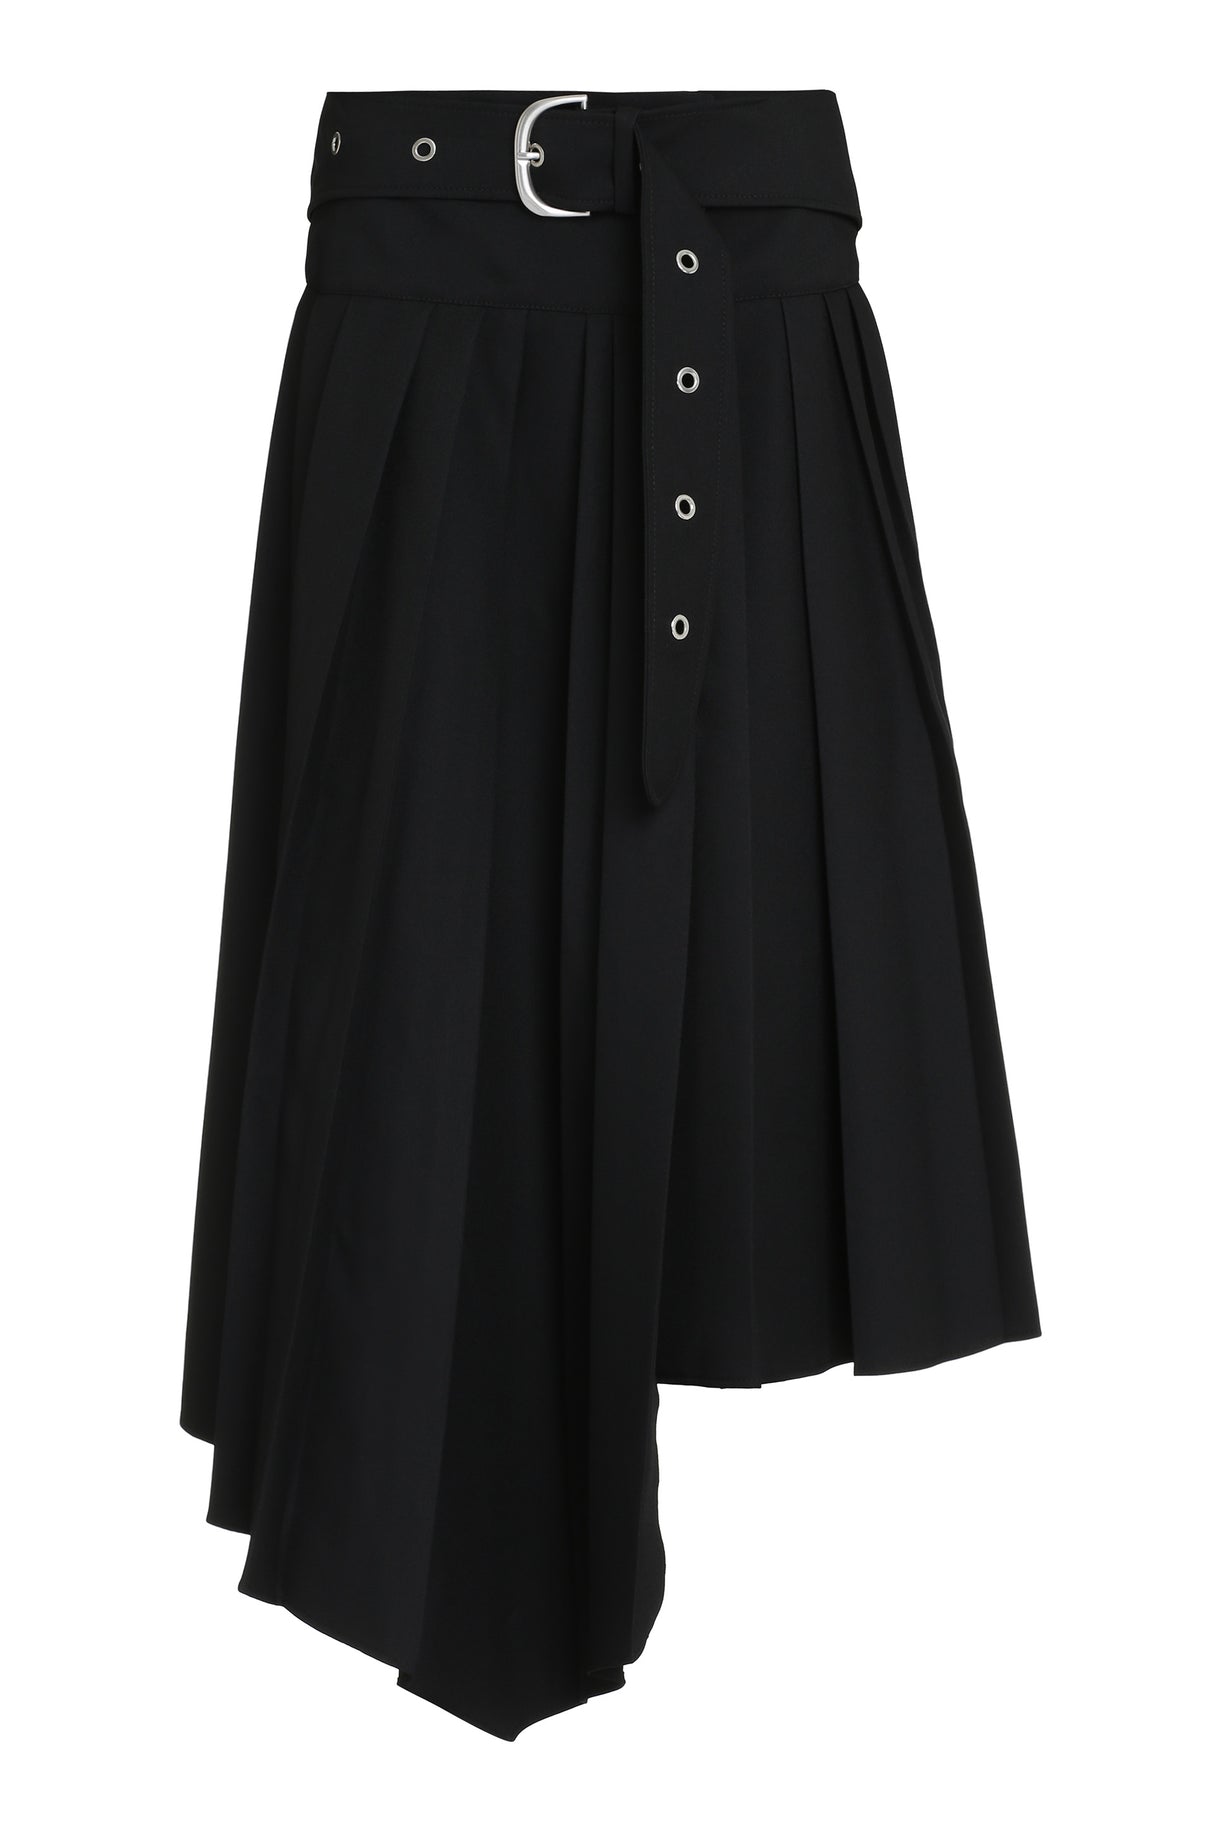 Chic Black Asymmetrical Skirt with Logo Jacquard Lining